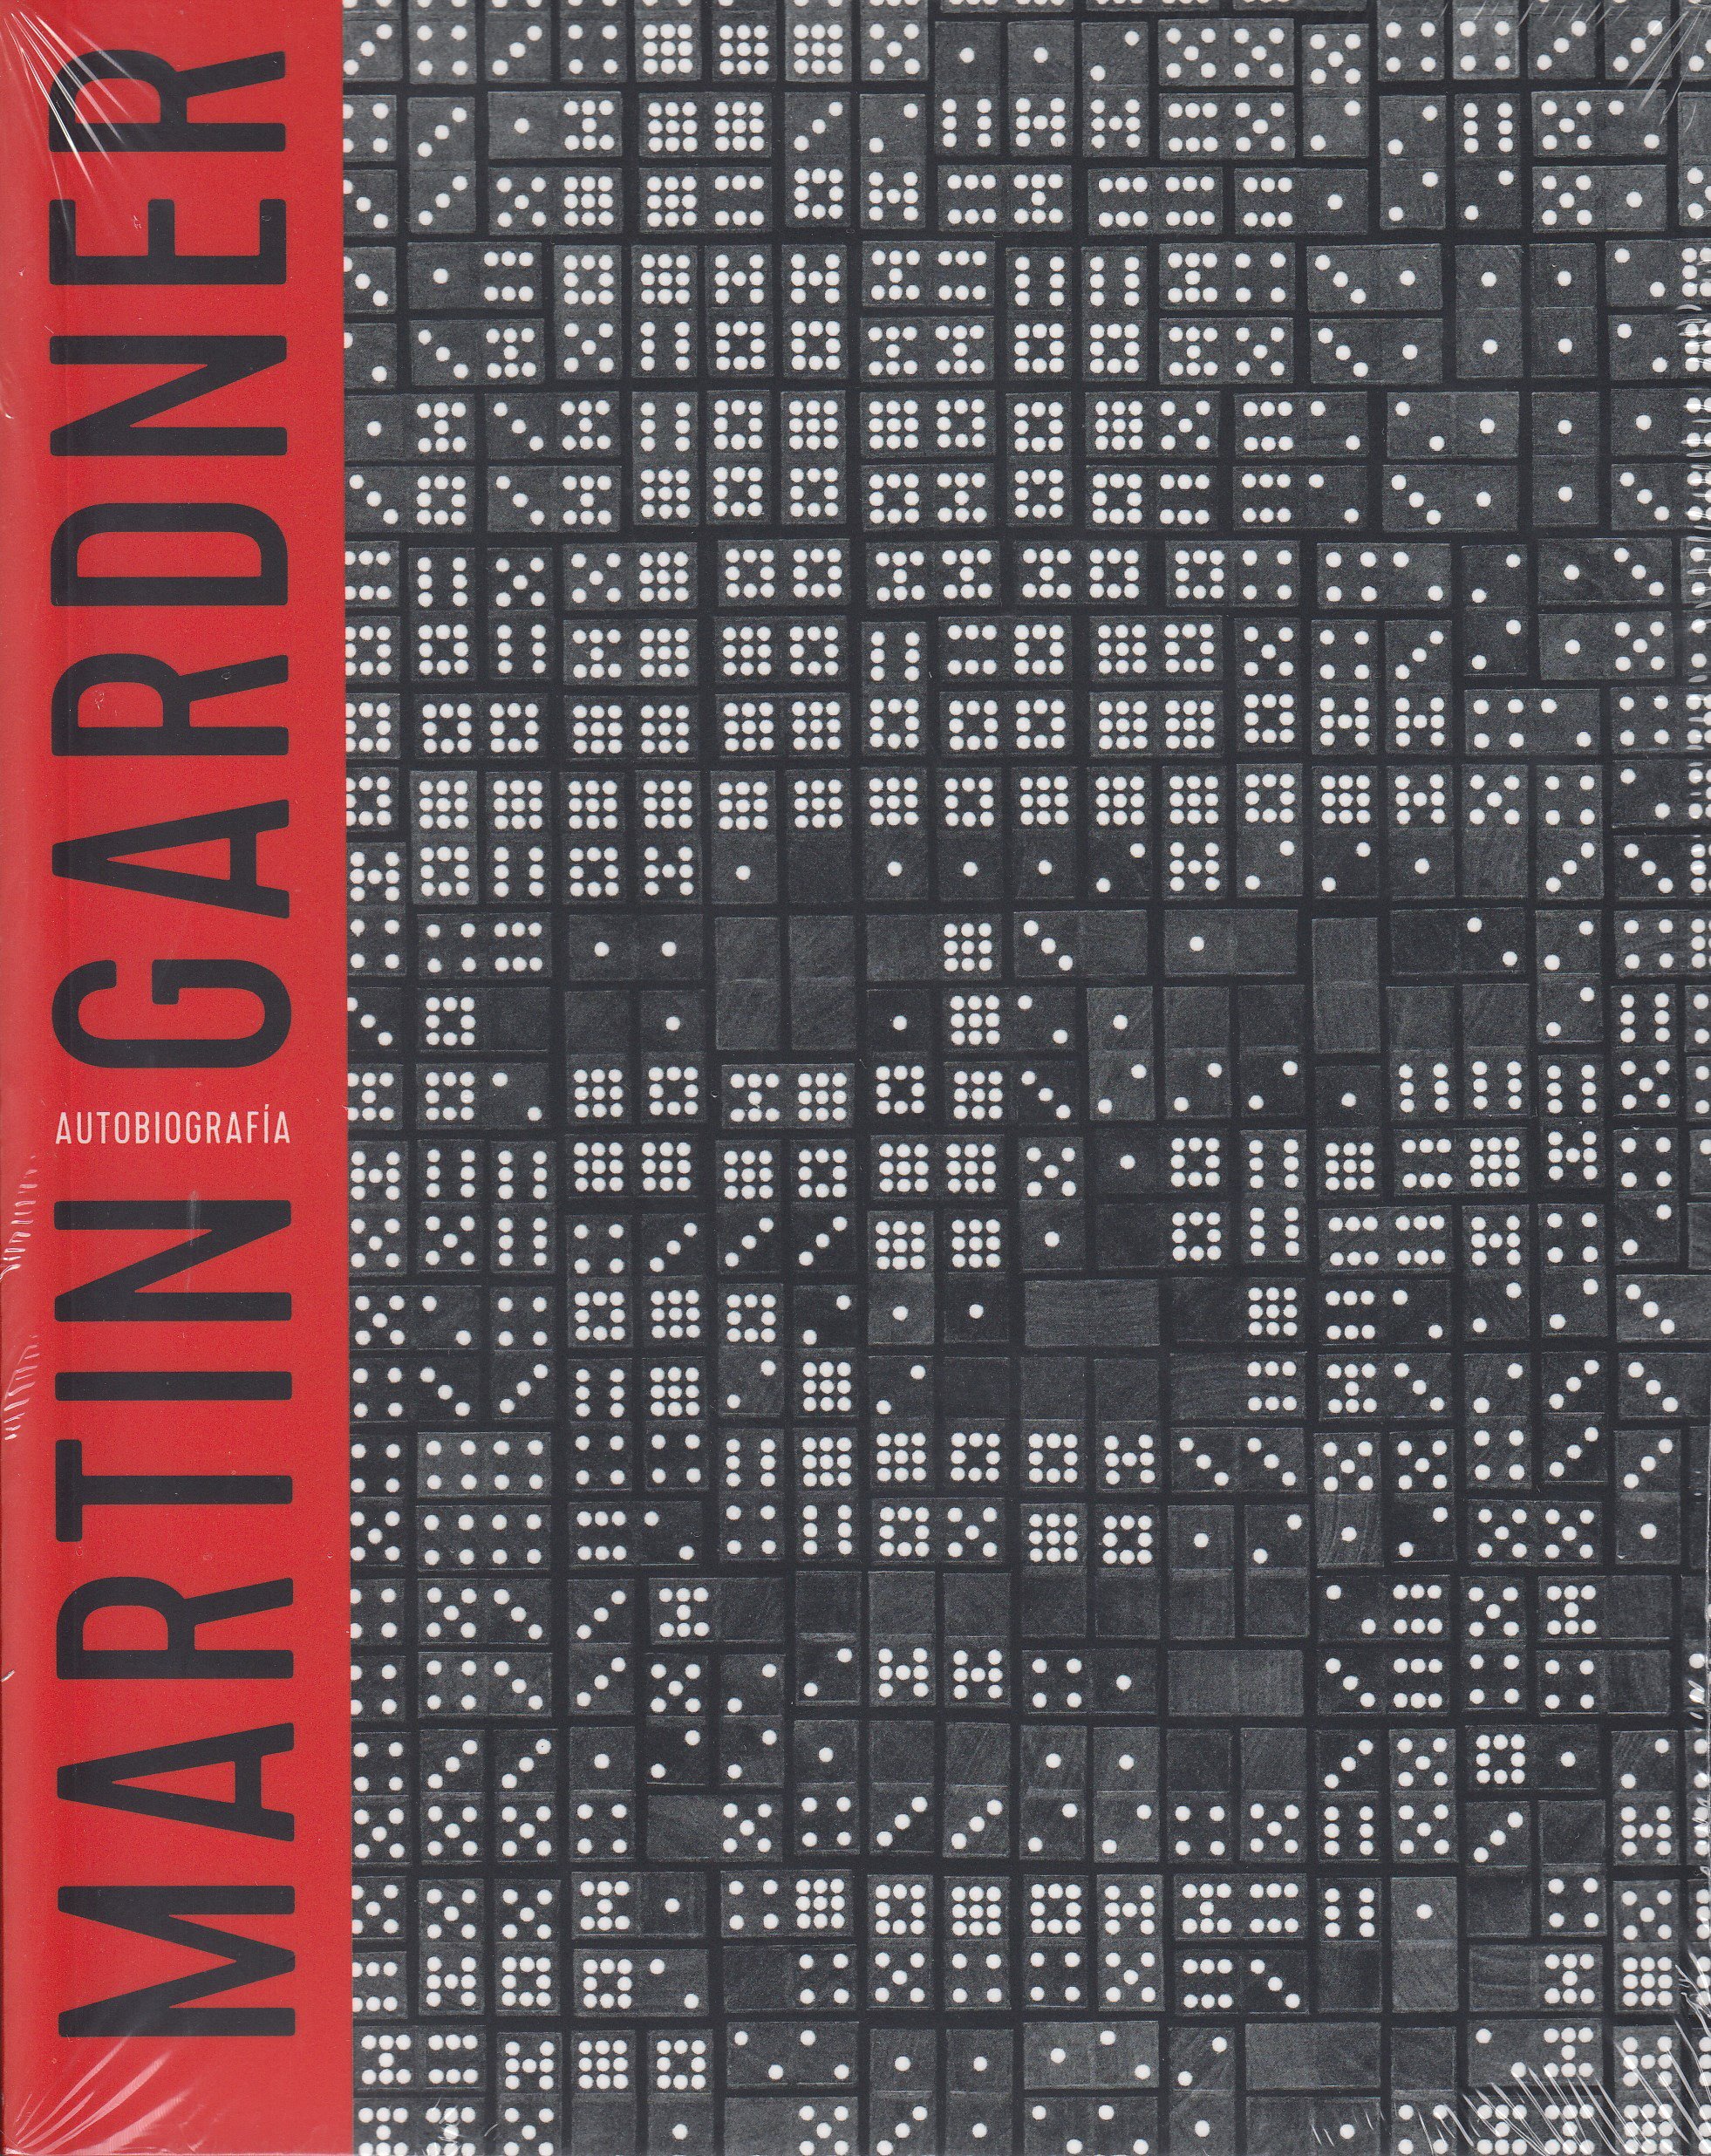 ¡Puro abracadabra! : Martin Gardner autobiografía / traducción: Luis Bou ; prólogo: Fernando Blasco